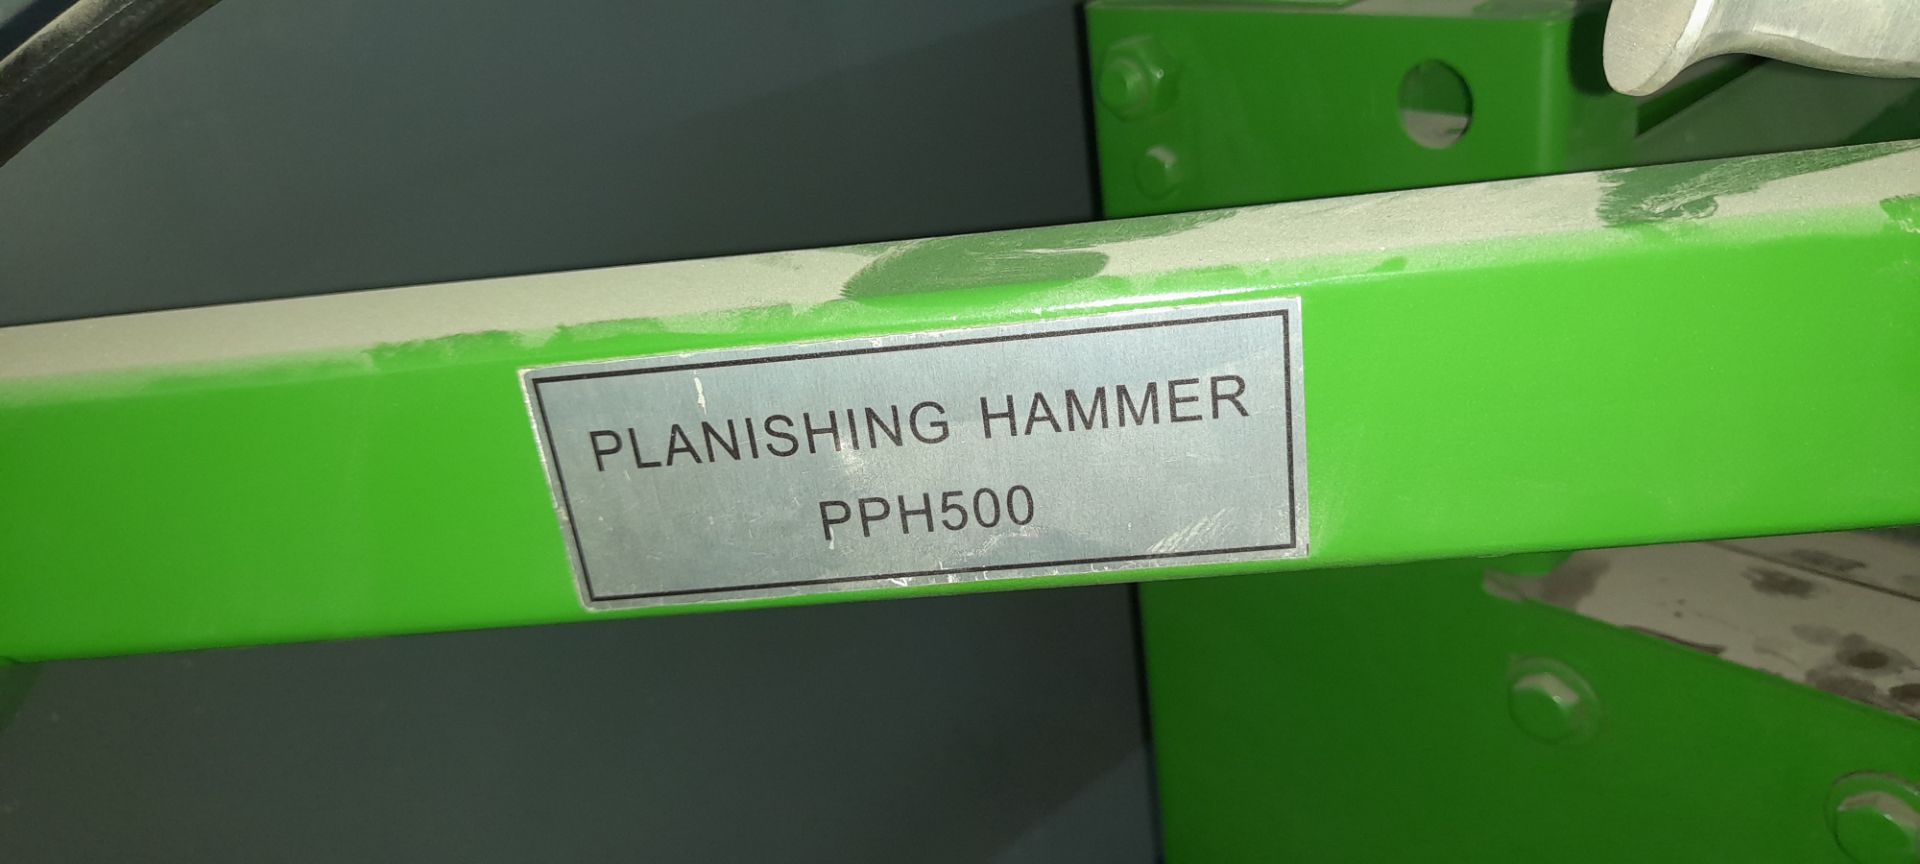 PPH500 Planishing Hammer - Image 3 of 3